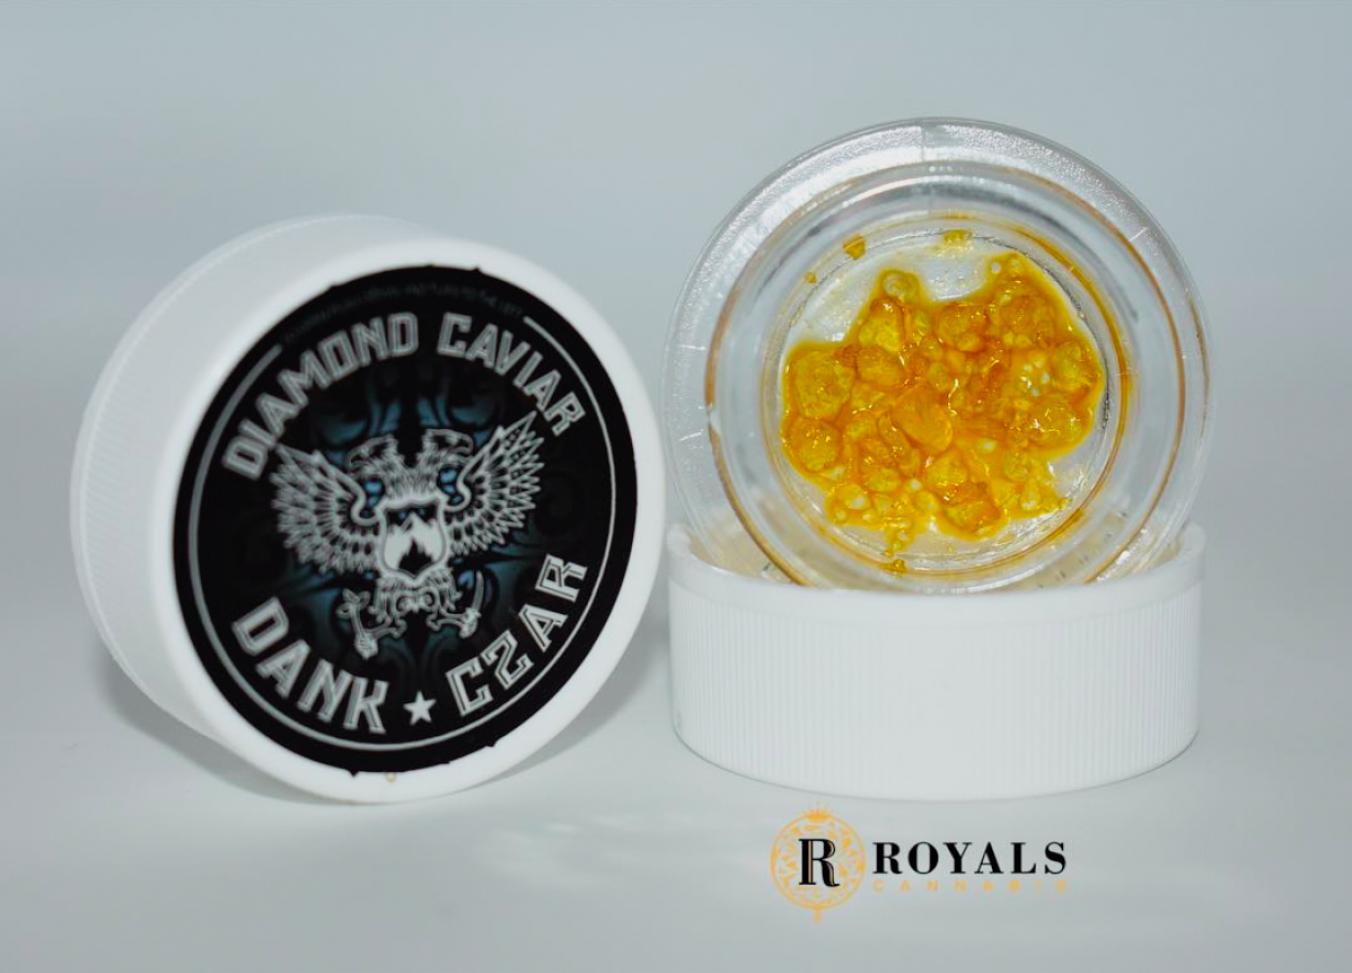 Diamond Caviar by Dank Czar